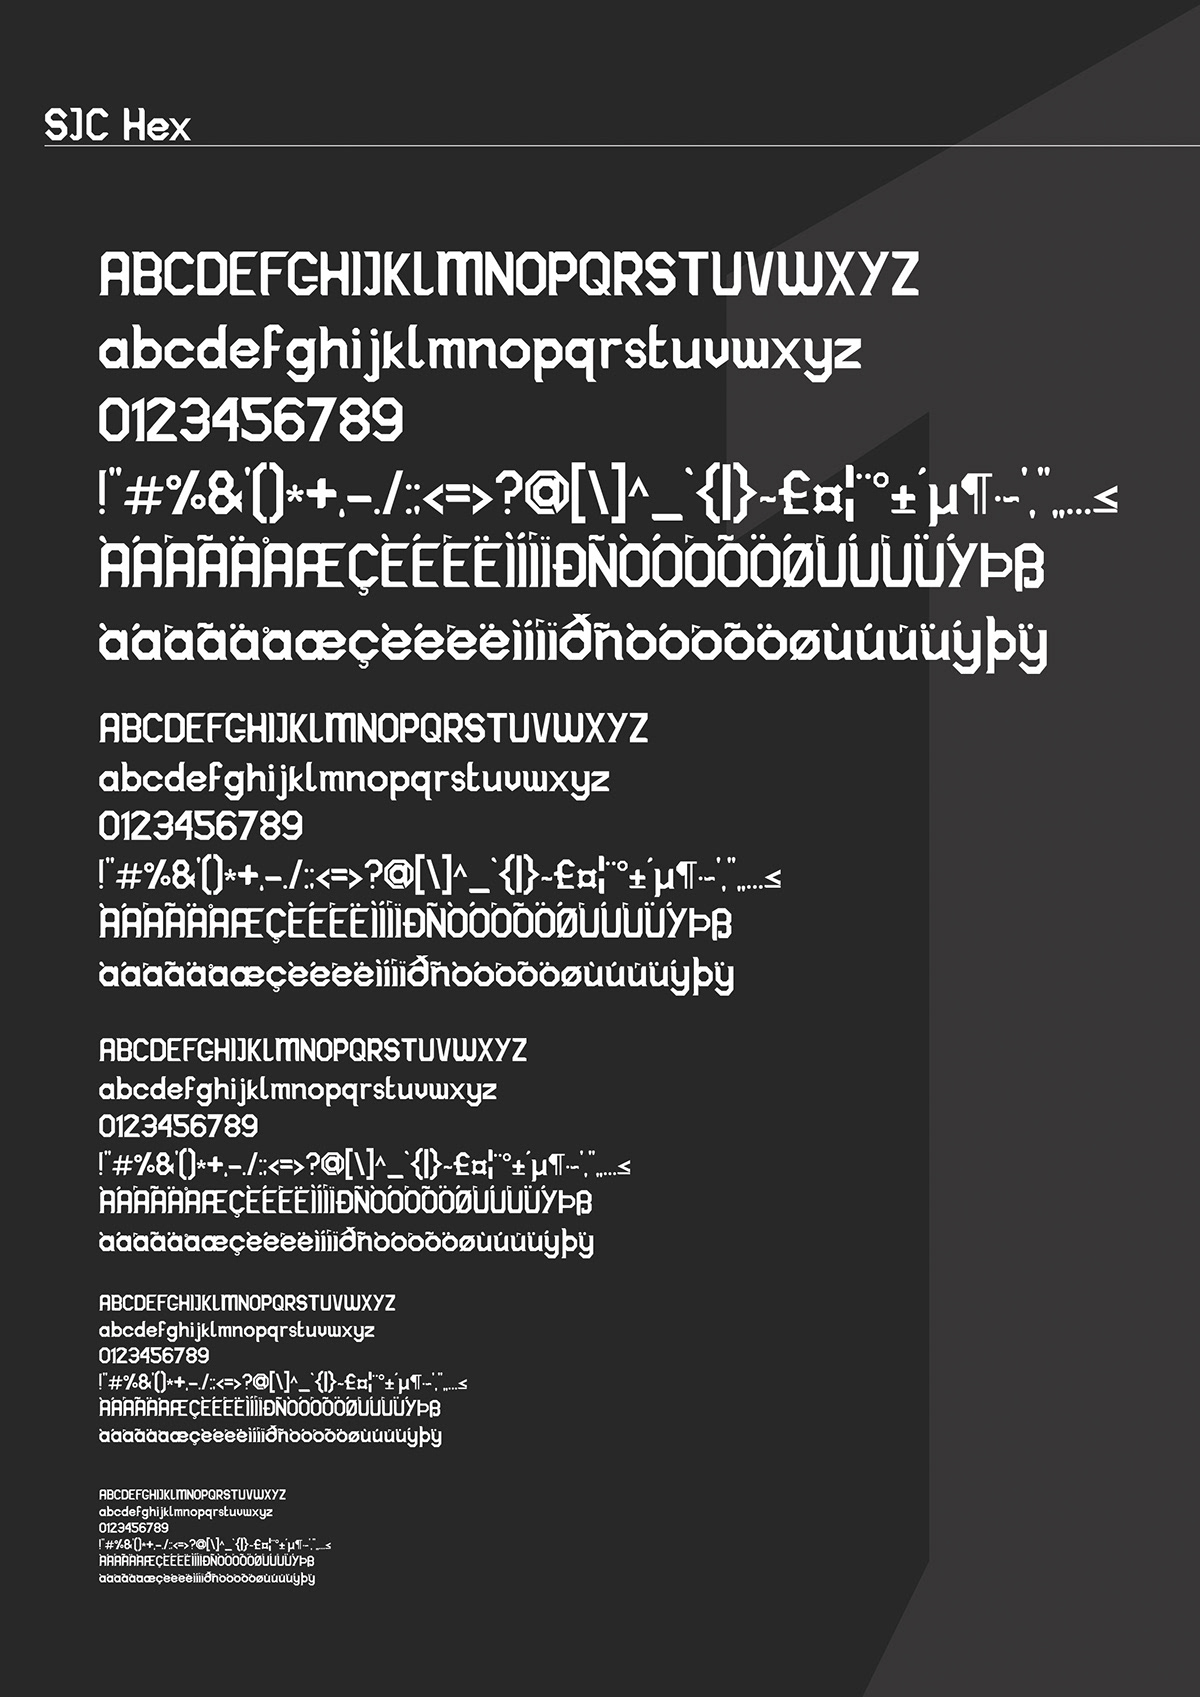 Vorticist futurist future Vorticism Typeface font